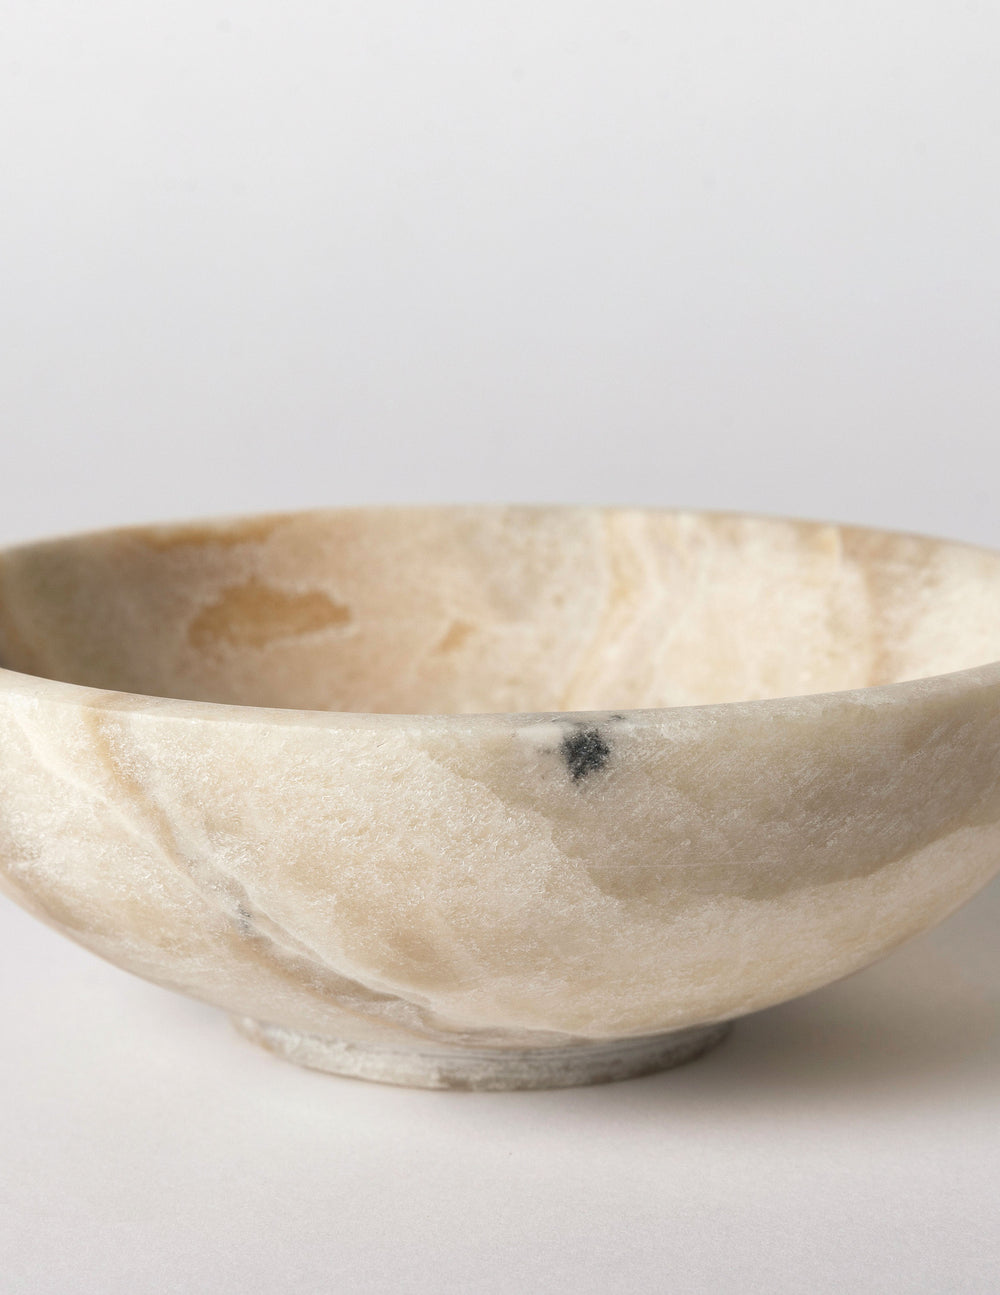 Medium Bowl, Onyx Marble